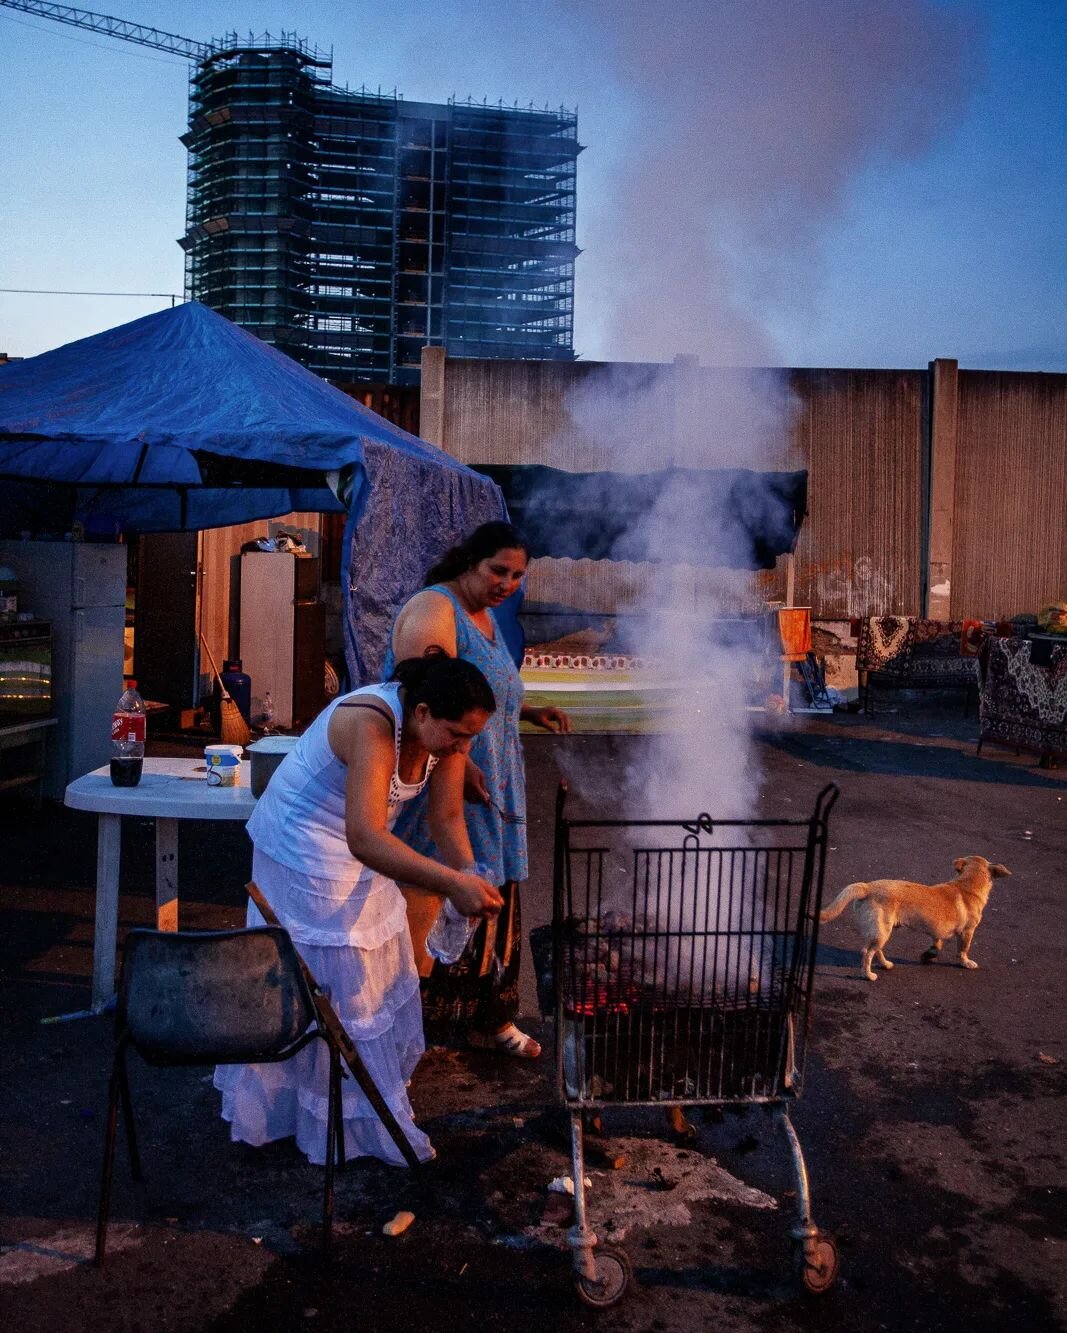 Churrasco cigano
Gypsy barbecue
Campo Rom di Via Triboniano
Milano 2010
.
.
.
#streetphotographymagazine
#reportagespotlight
#documentaryphotography
#EverydayEverywhere
#capturestreets
#PeraPhotoGallery
#ihatesp
#eyeshotmag
#myfeatureshoot
#hcsc_stre